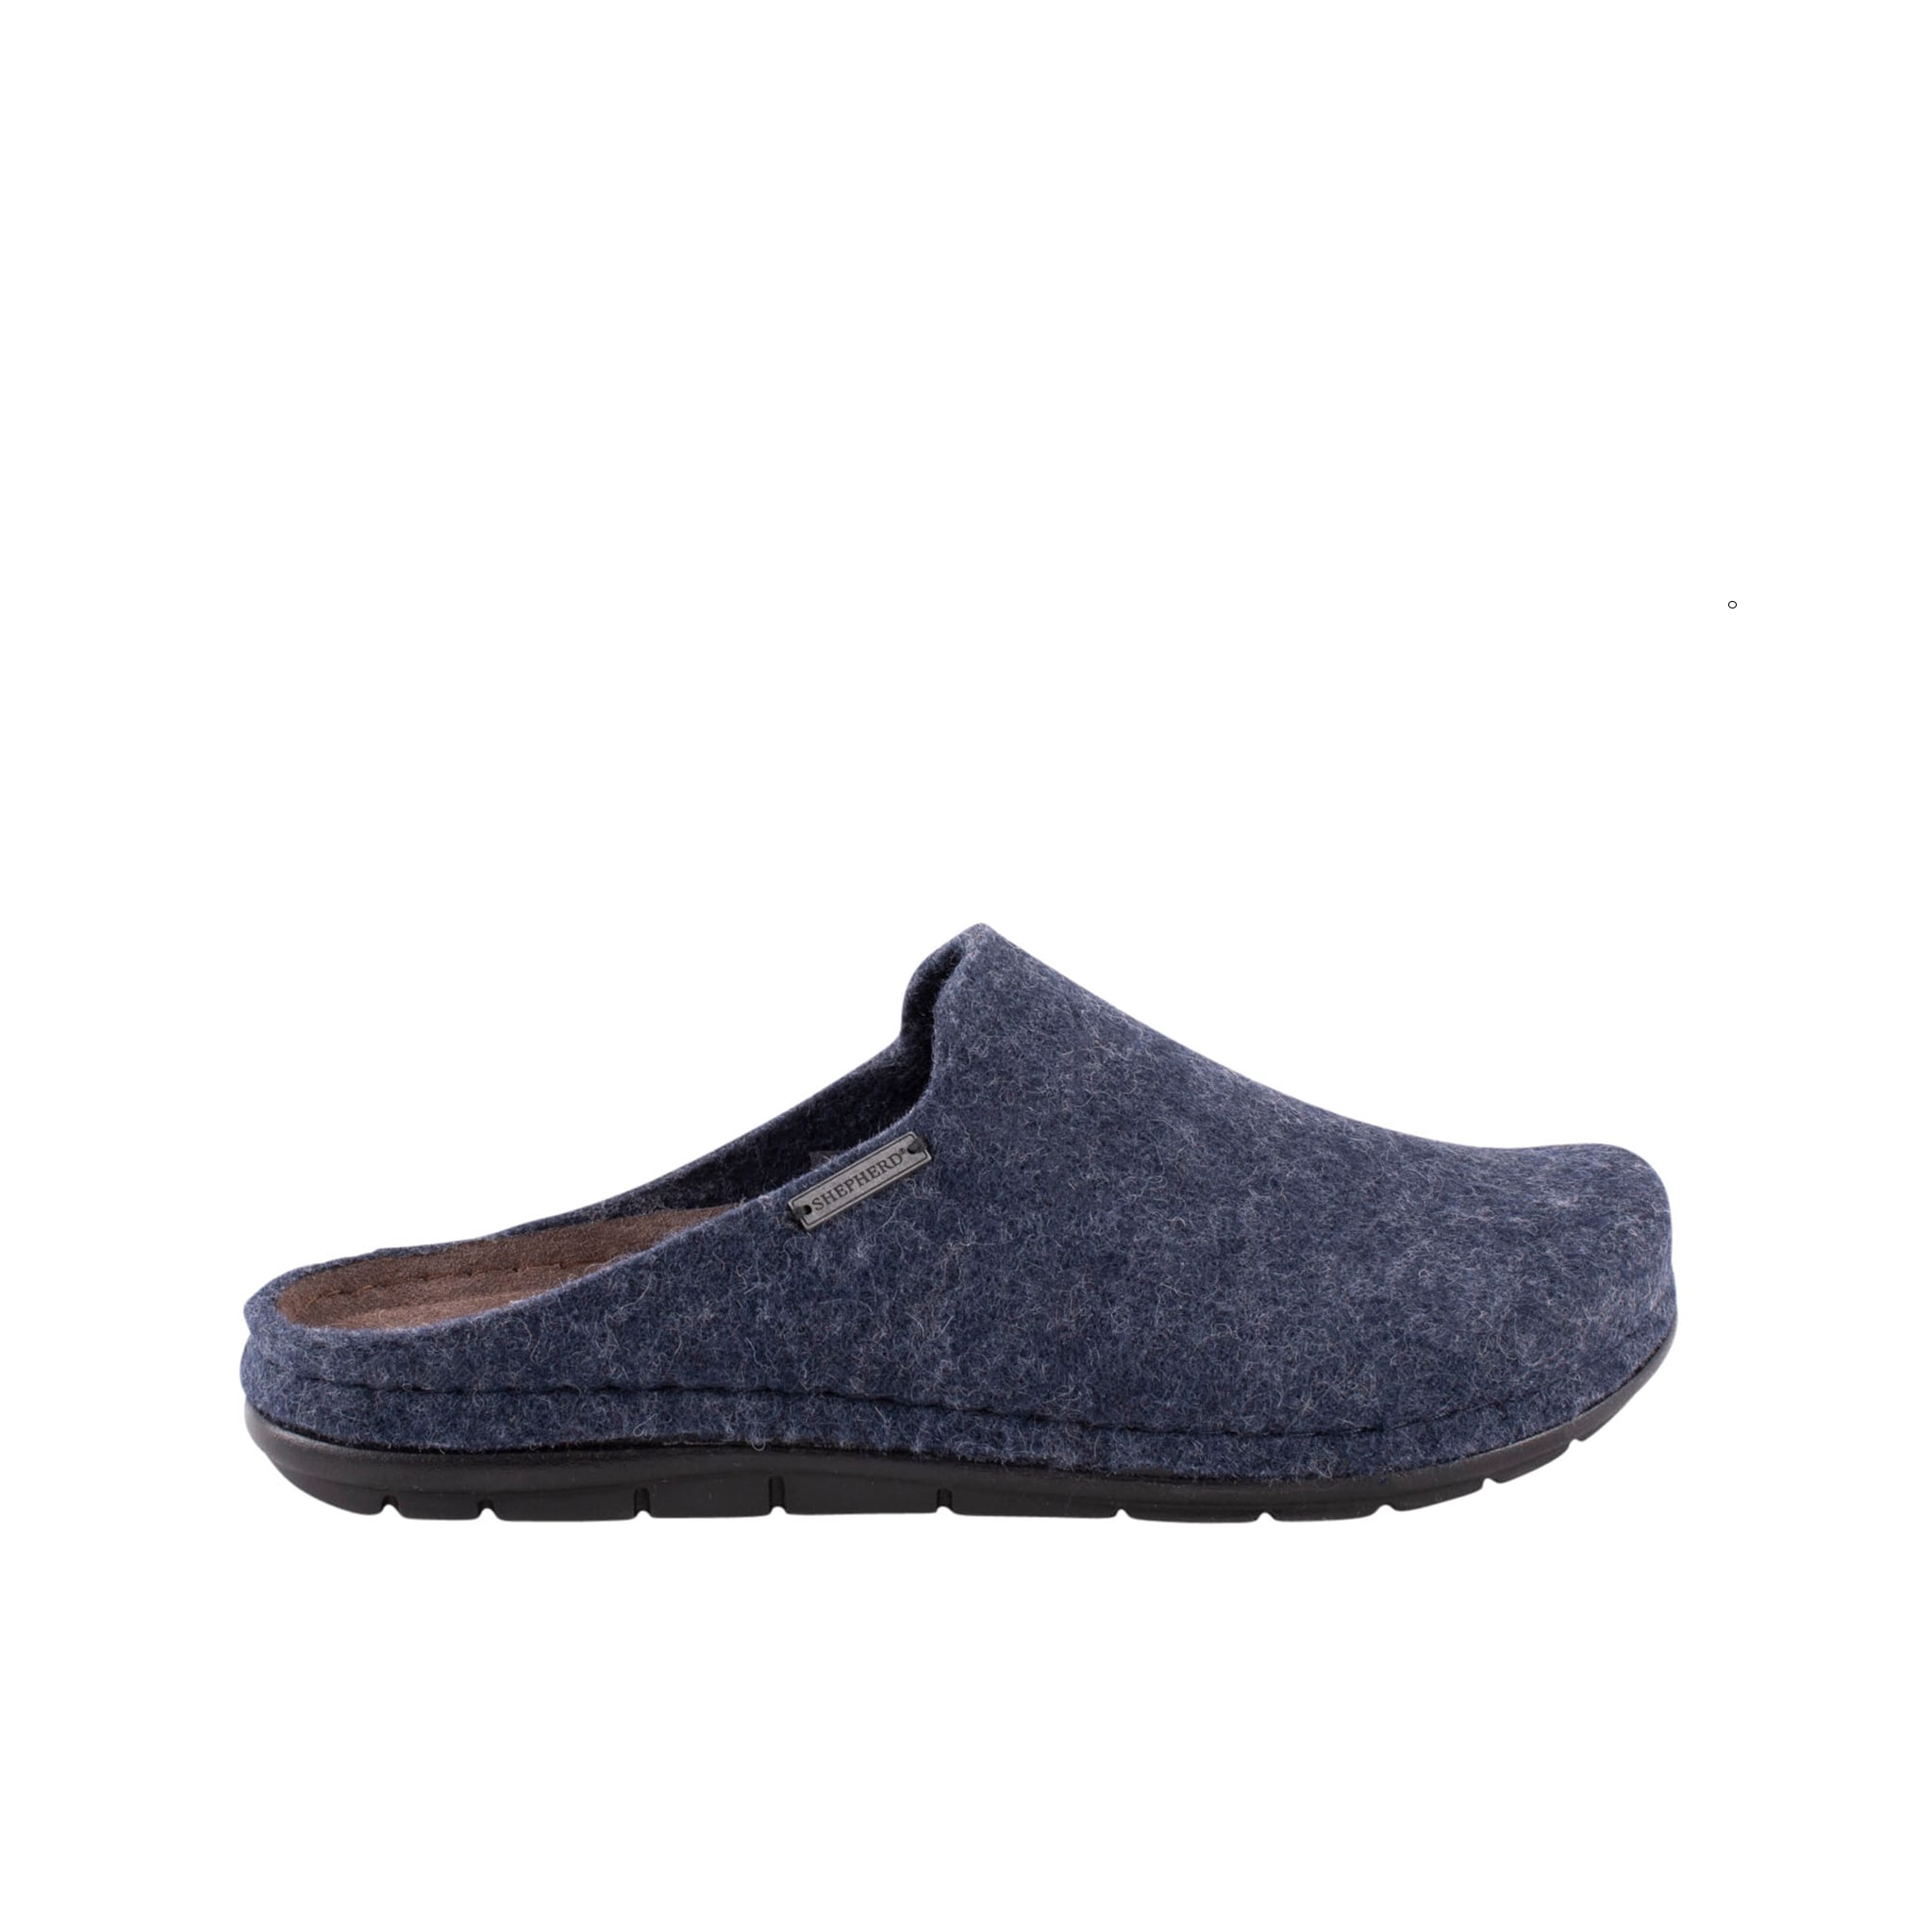 Samuel wool slippers